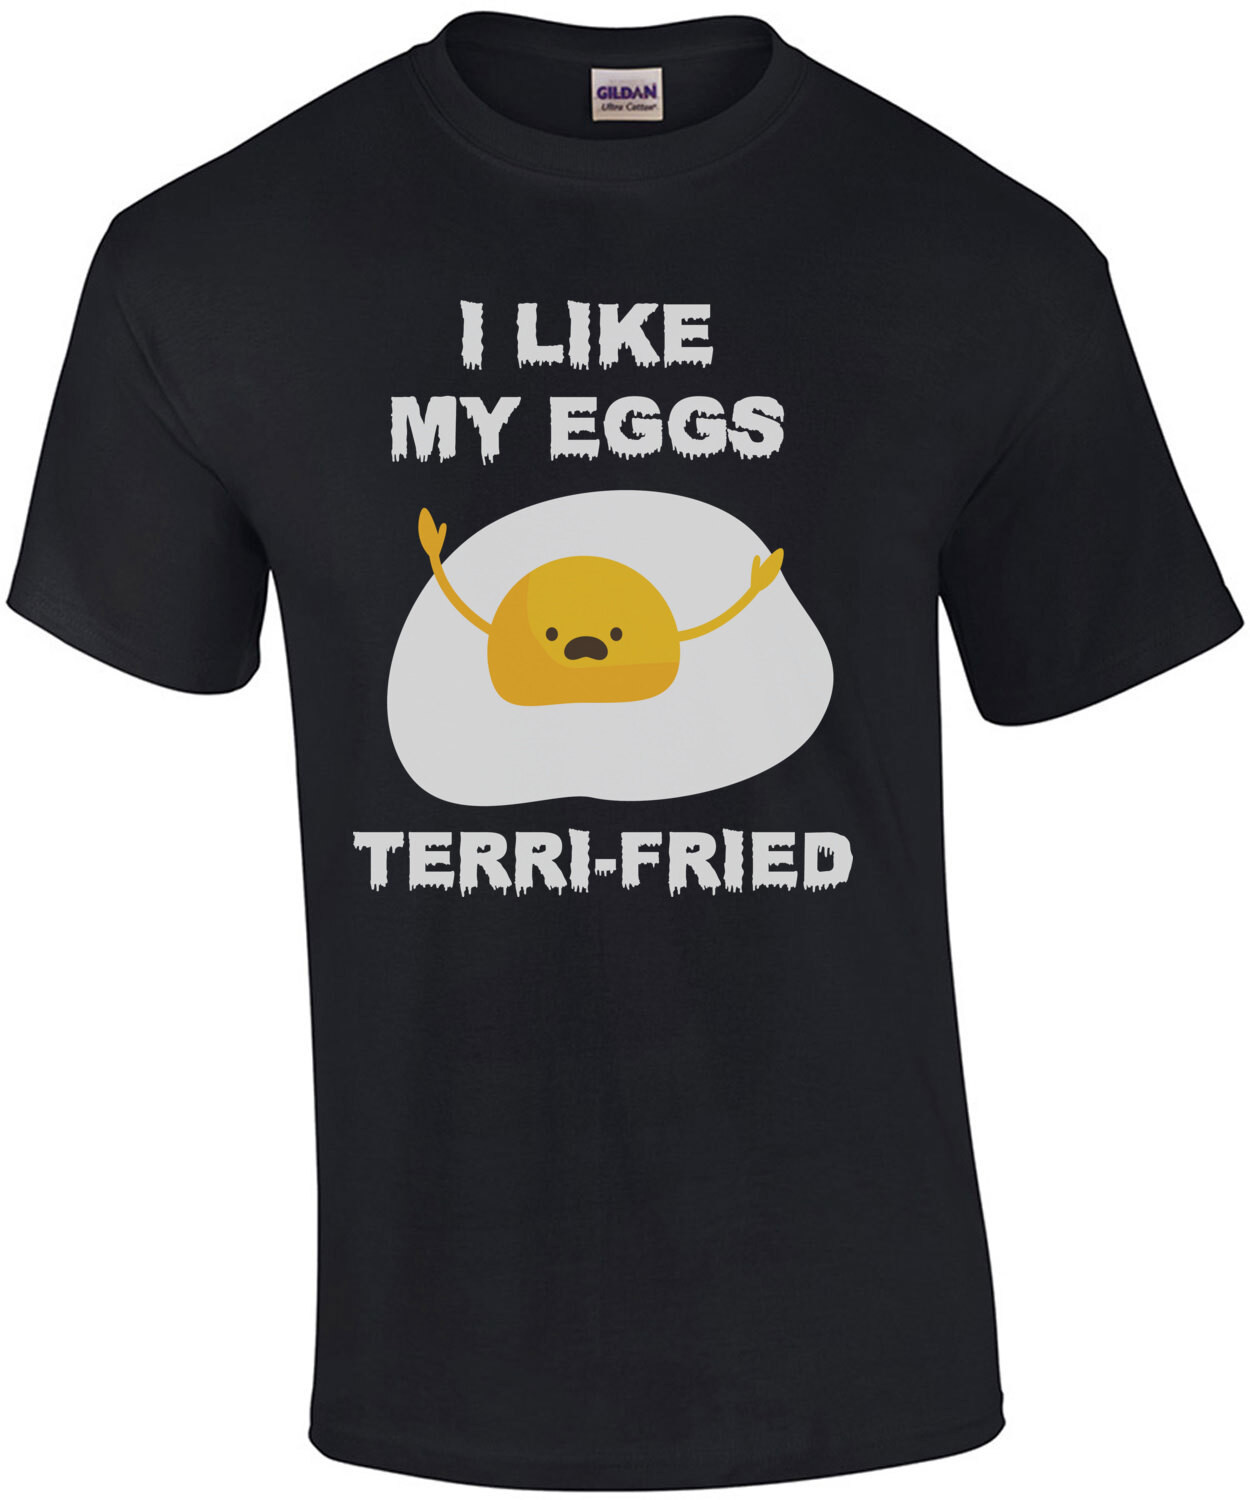 I like my eggs terri-fried - funny pun t-shirt